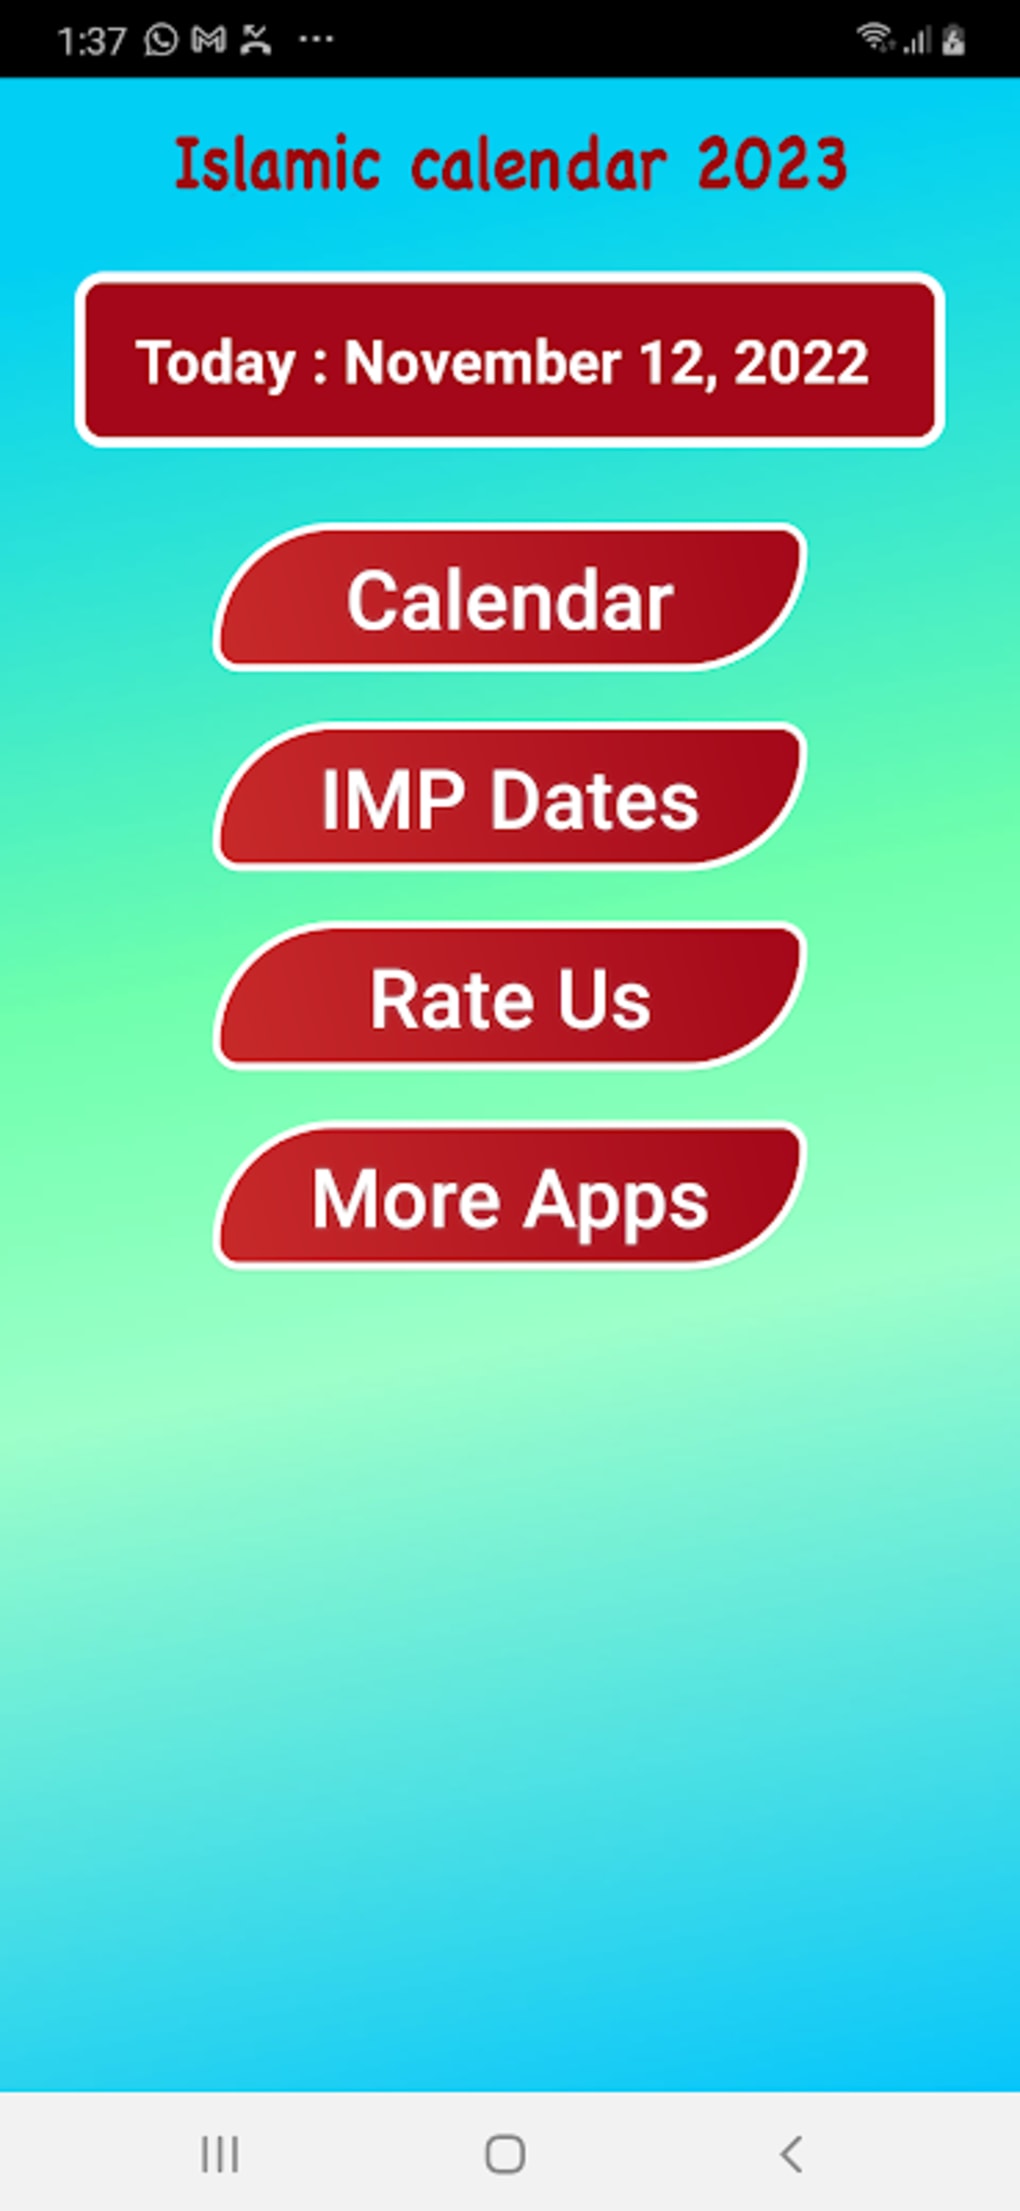 Islamic/Urdu calendar 2023 APK for Android Download